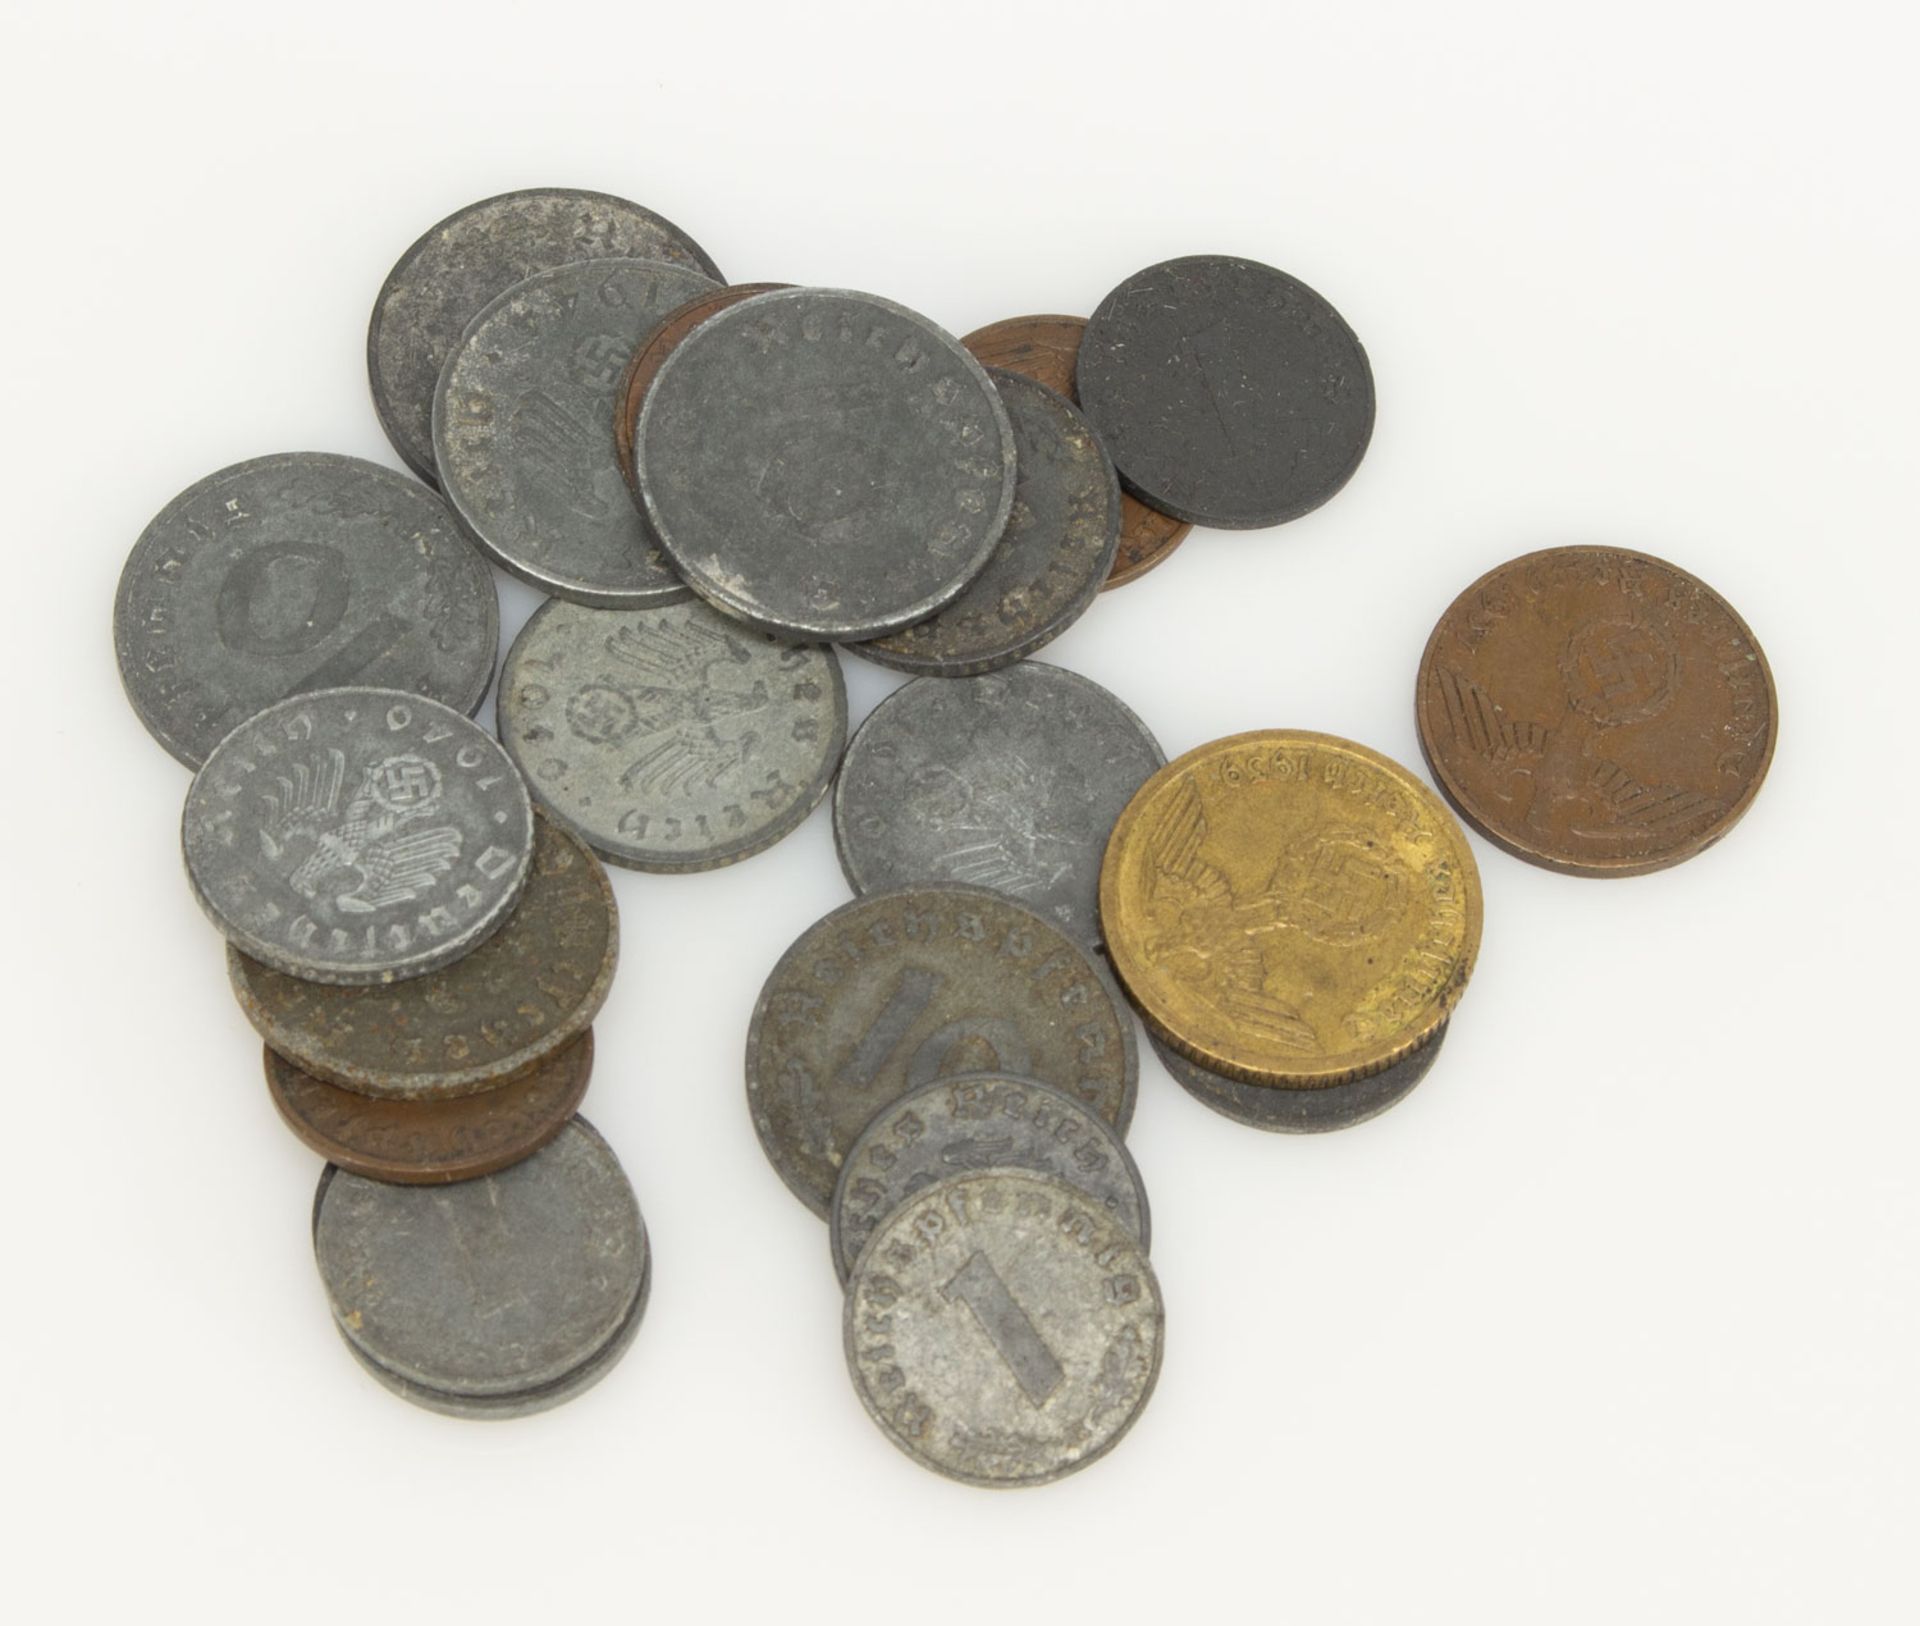 Lot Münzen